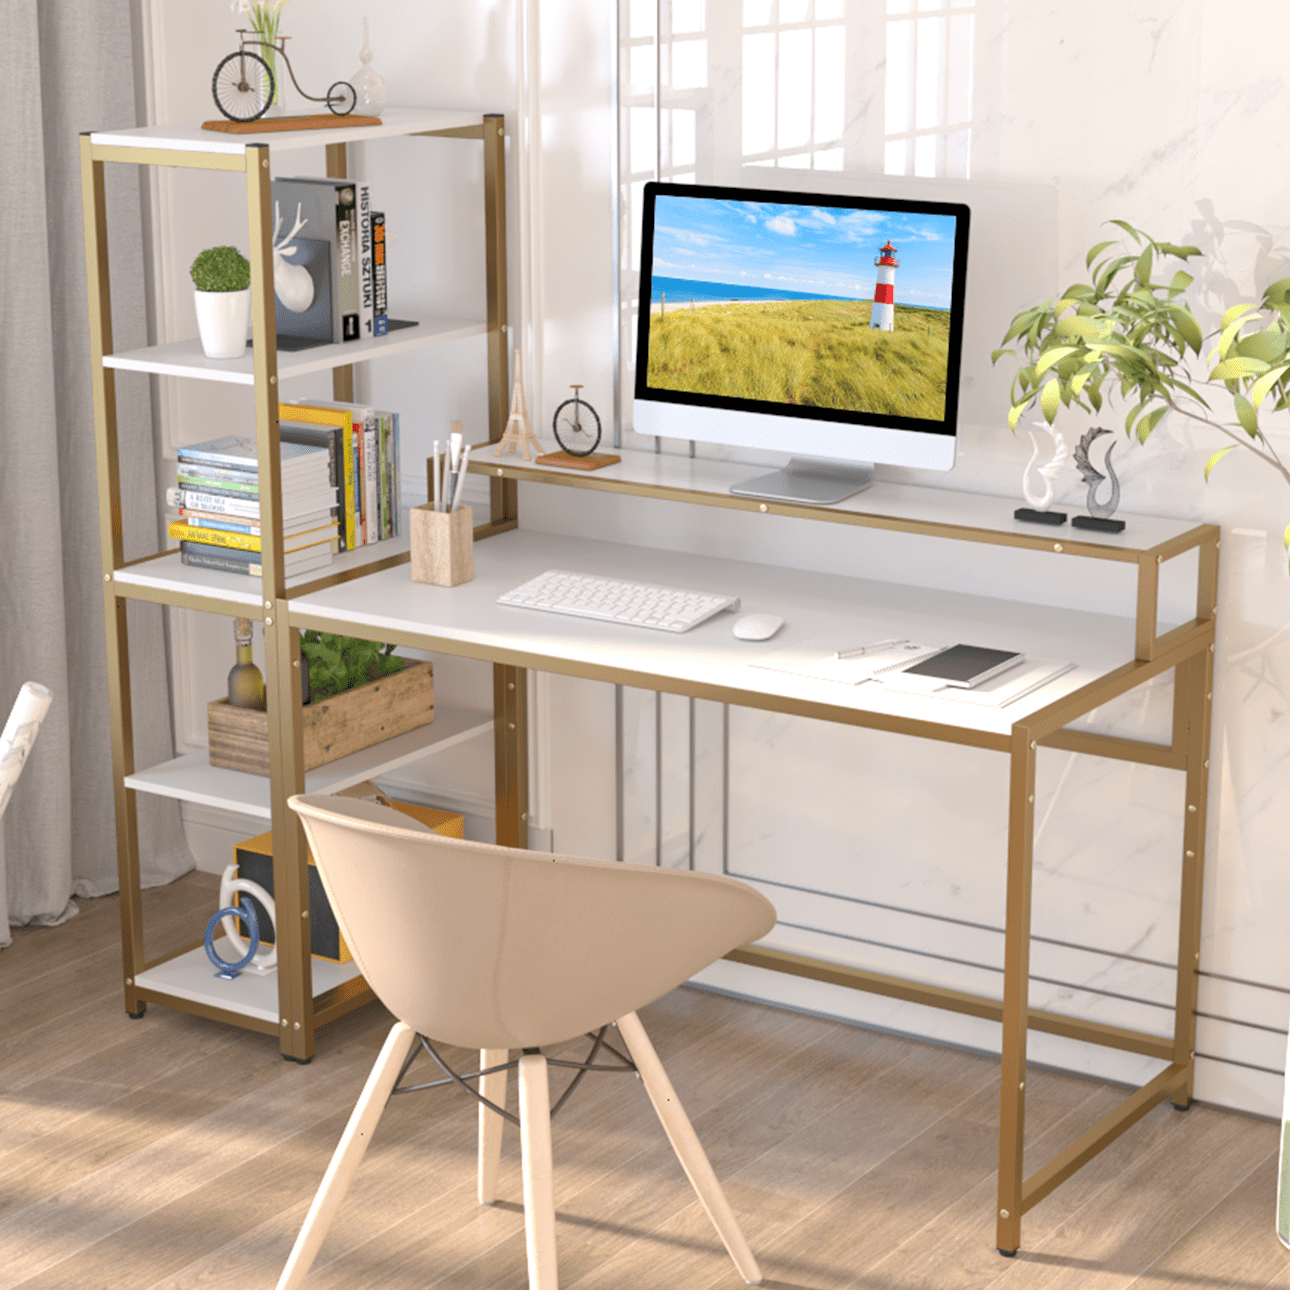 Details about   Home Office computer desk W/ Shelves 